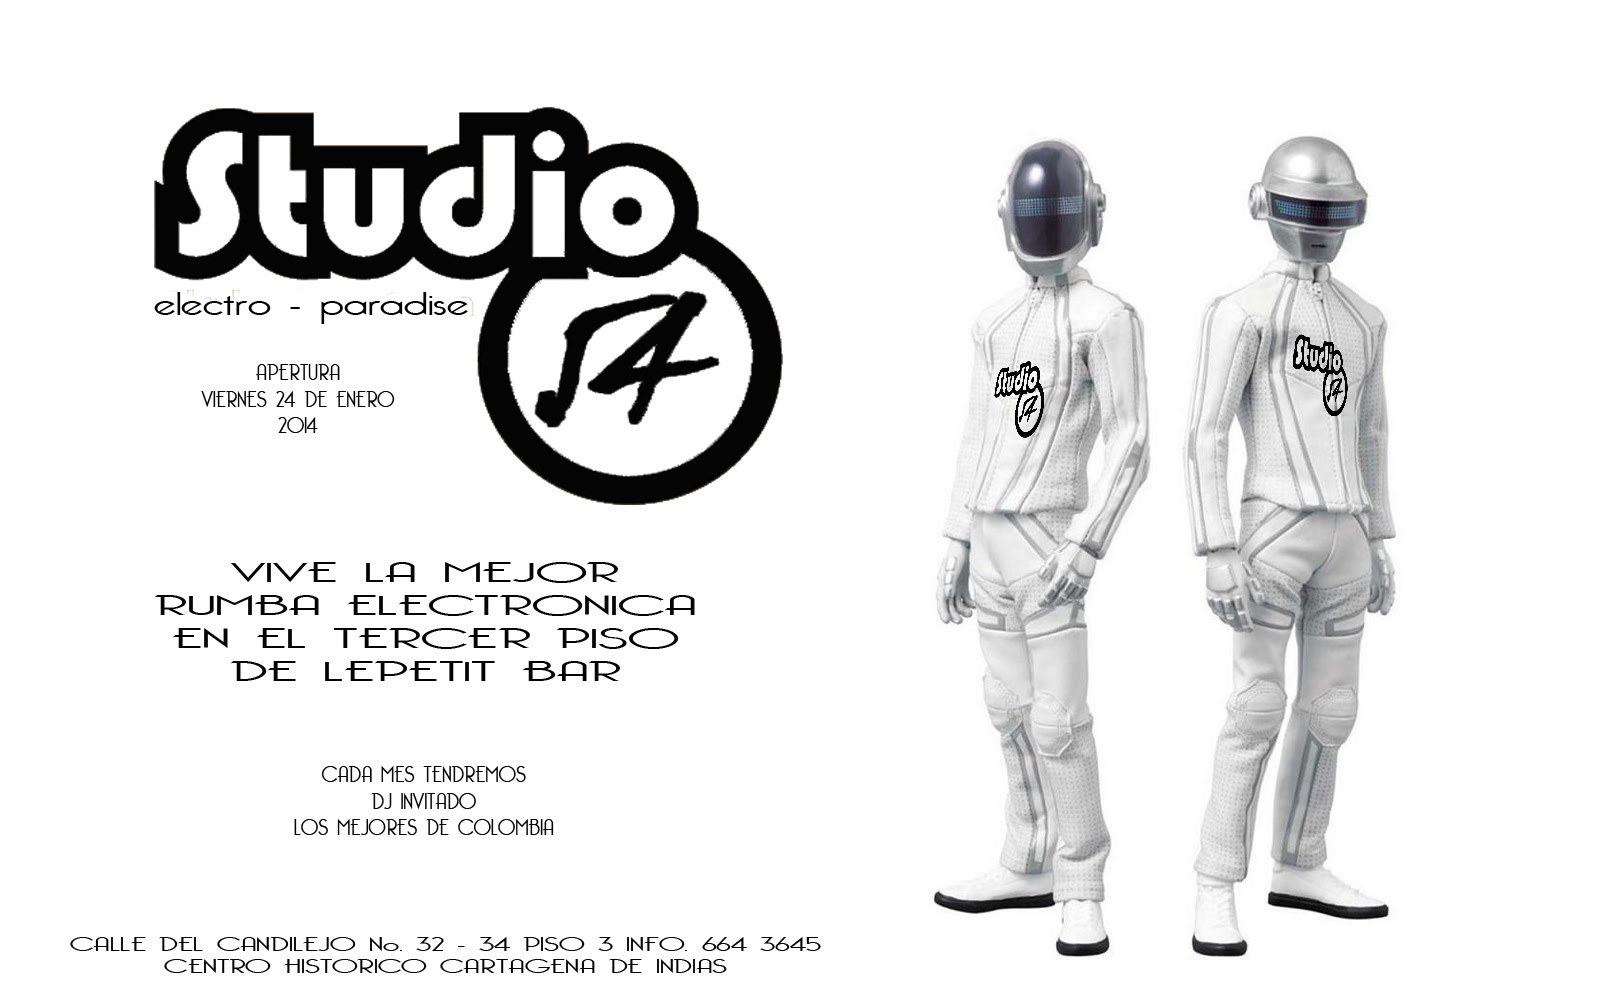 Studio 54 Cartagena